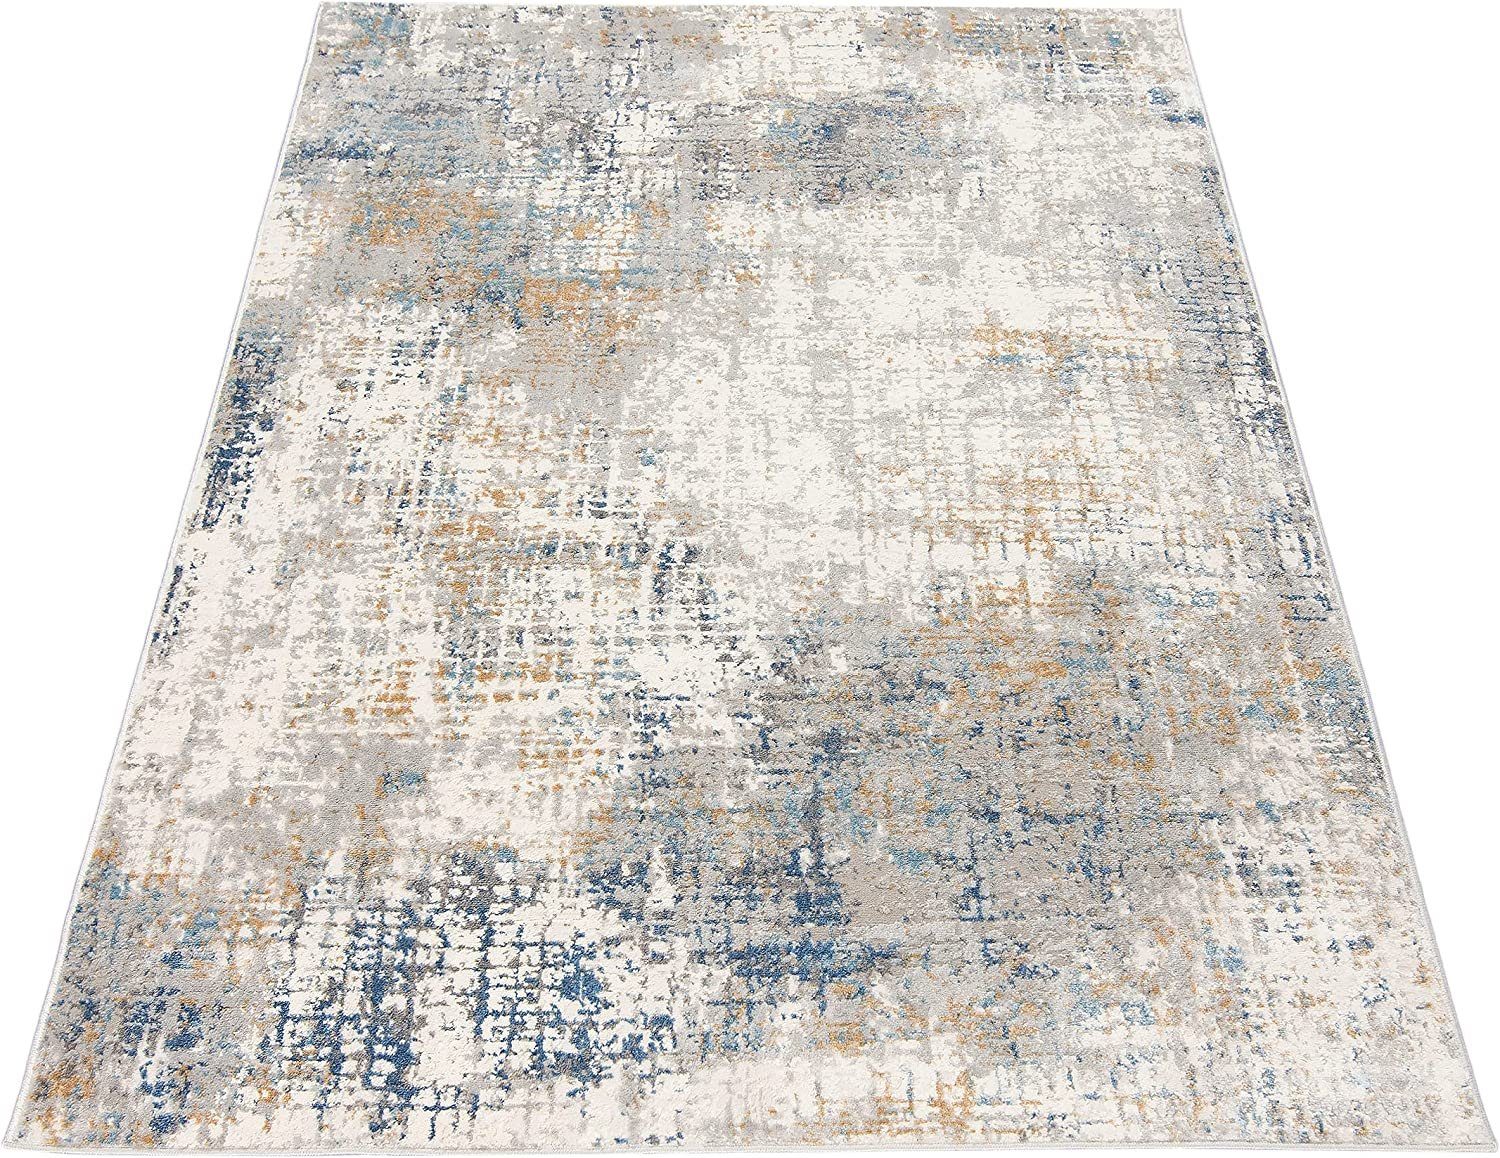 Teppich DY-PORTLAND-ABSTRACT, Mazovia, 80x150, Abstraktes, Gemustert Vintage, Kurzflor, Grau-Blau